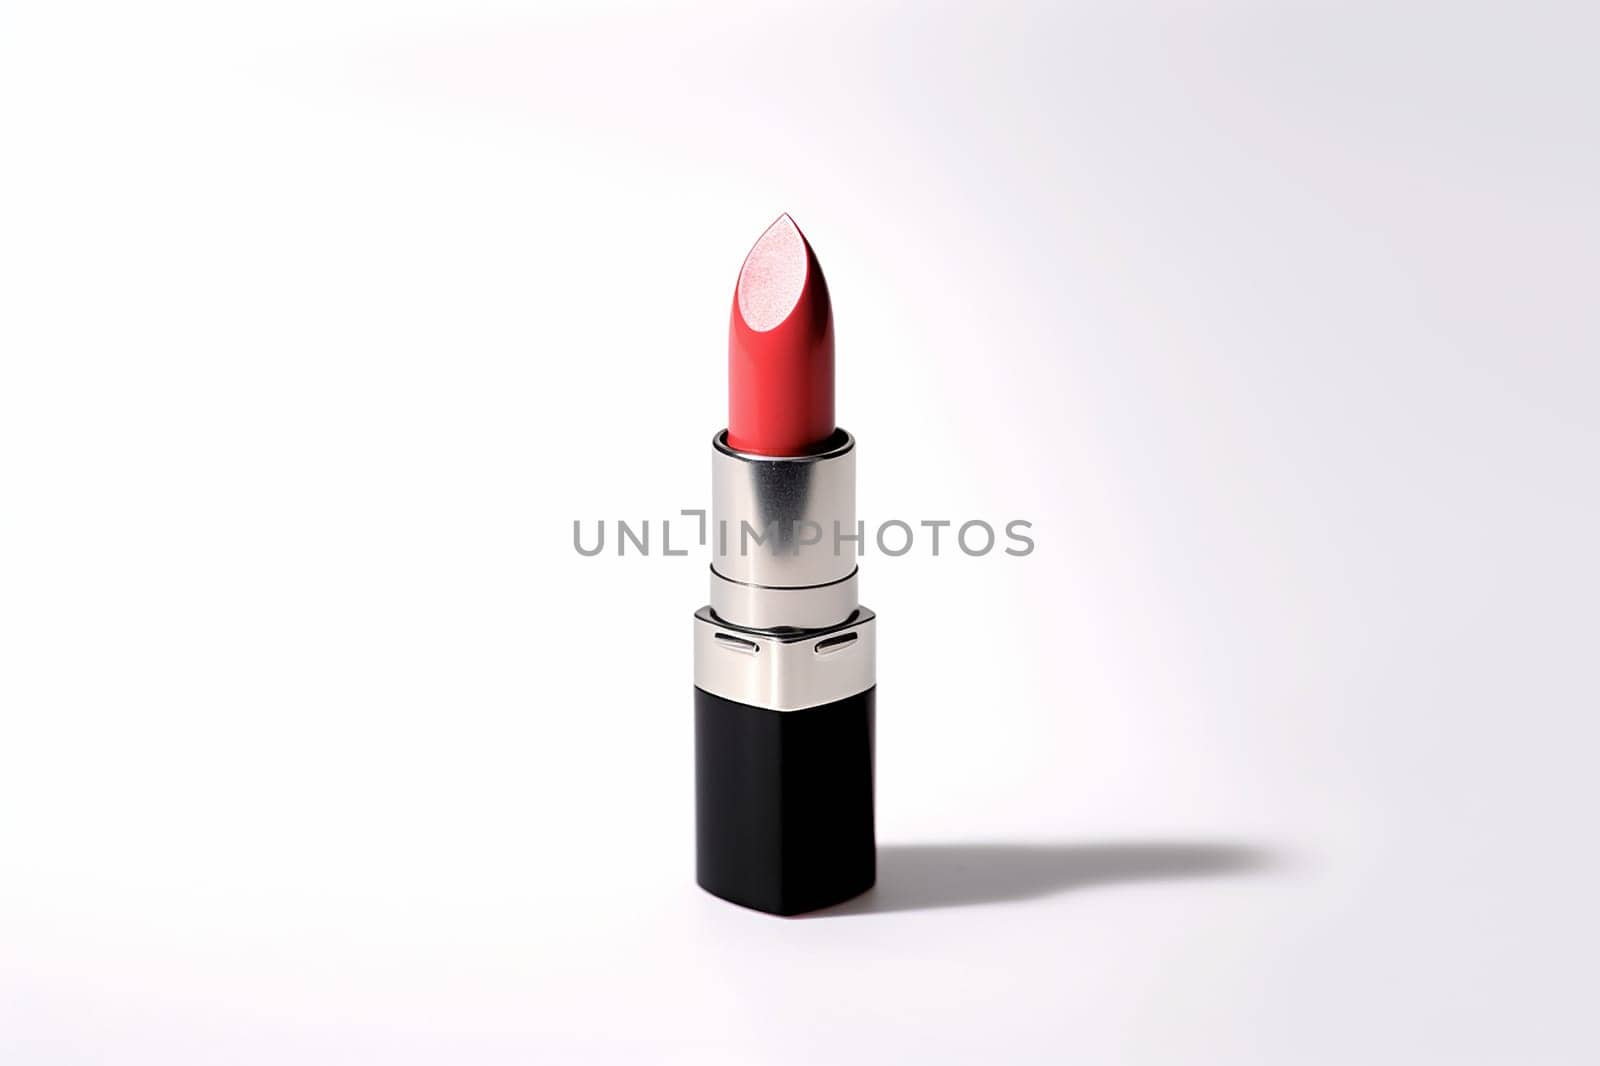 Classic red lipstick in sleek black tube on white background.